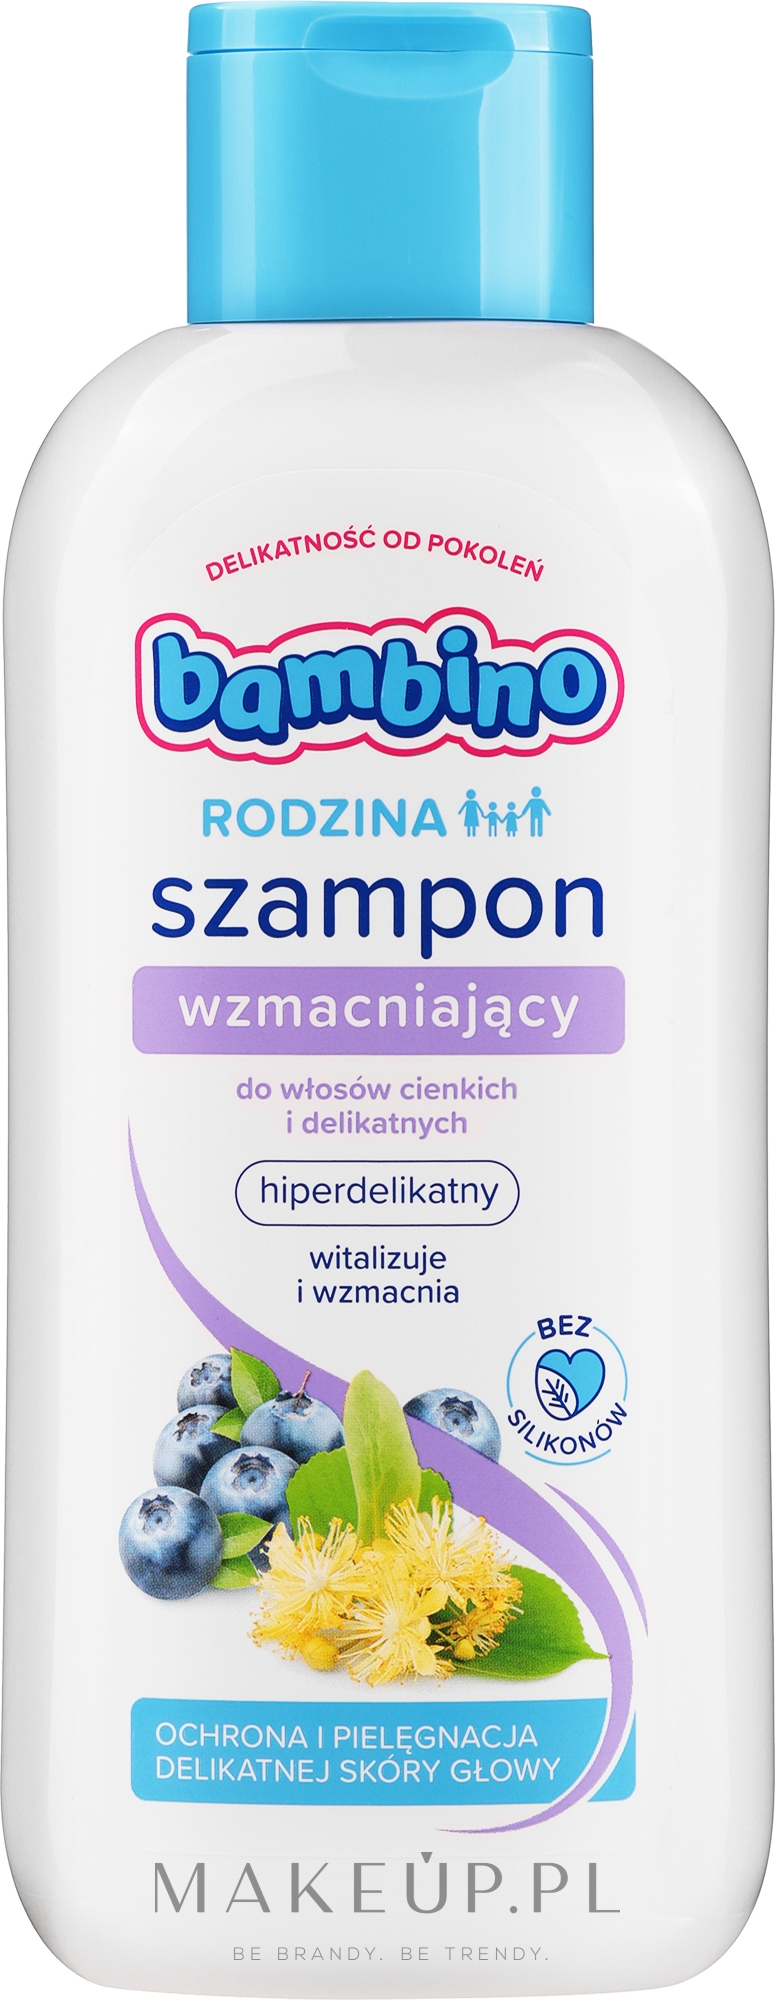 bioxsine szampon rossmann